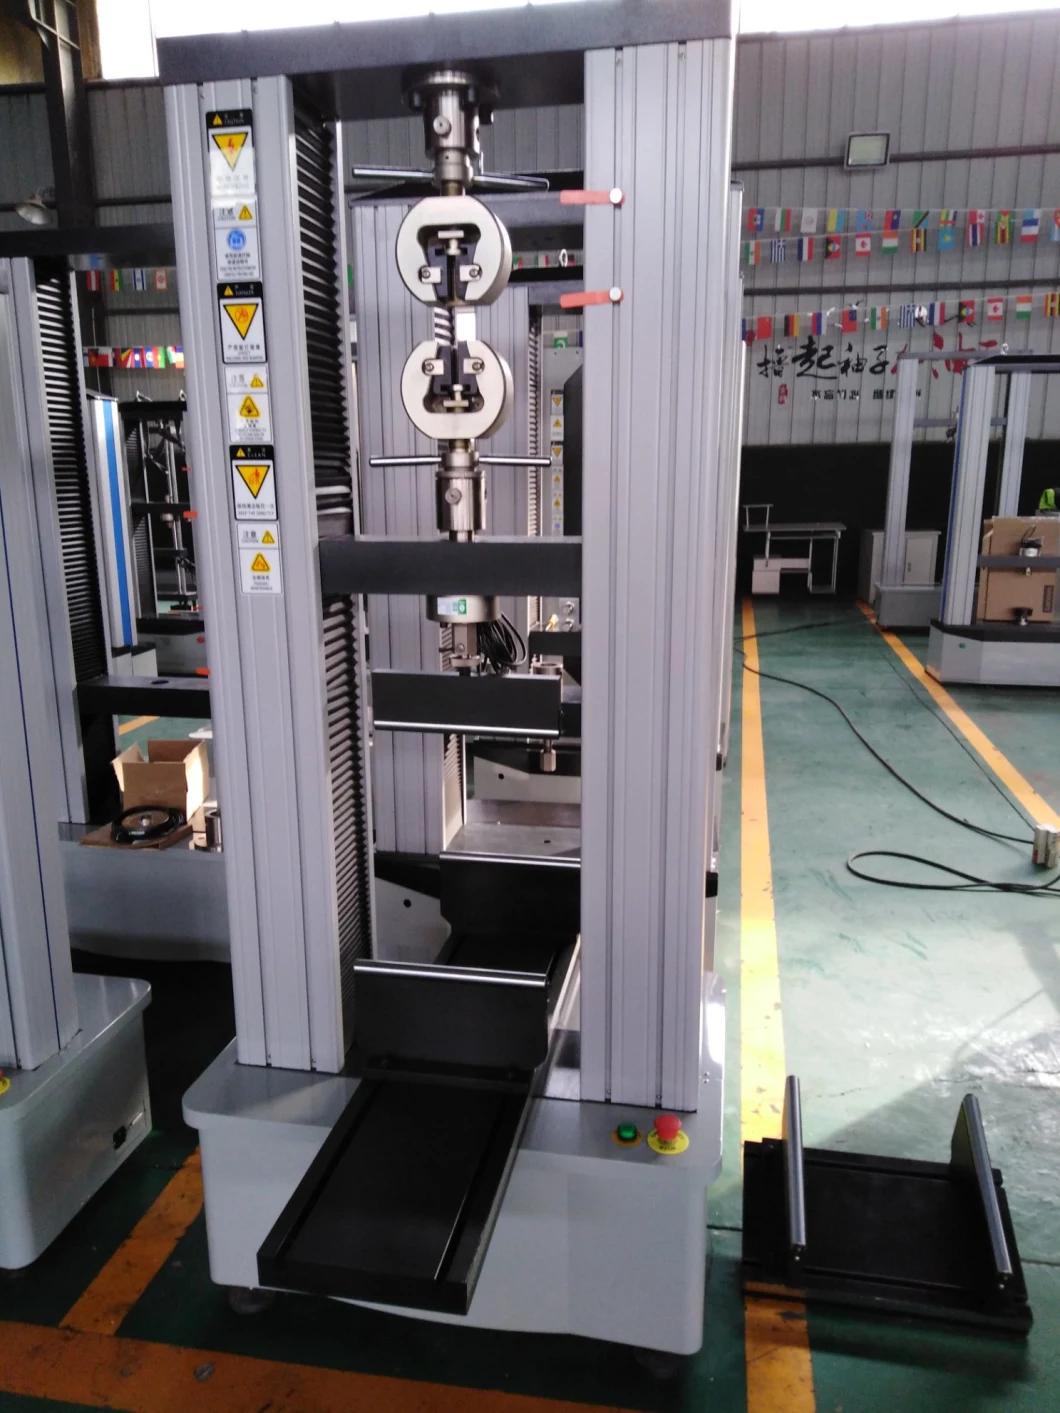 300/600/1000kn Universal Hydraulic Tensile Tester Hydraulic Loading Universal Testing Machine